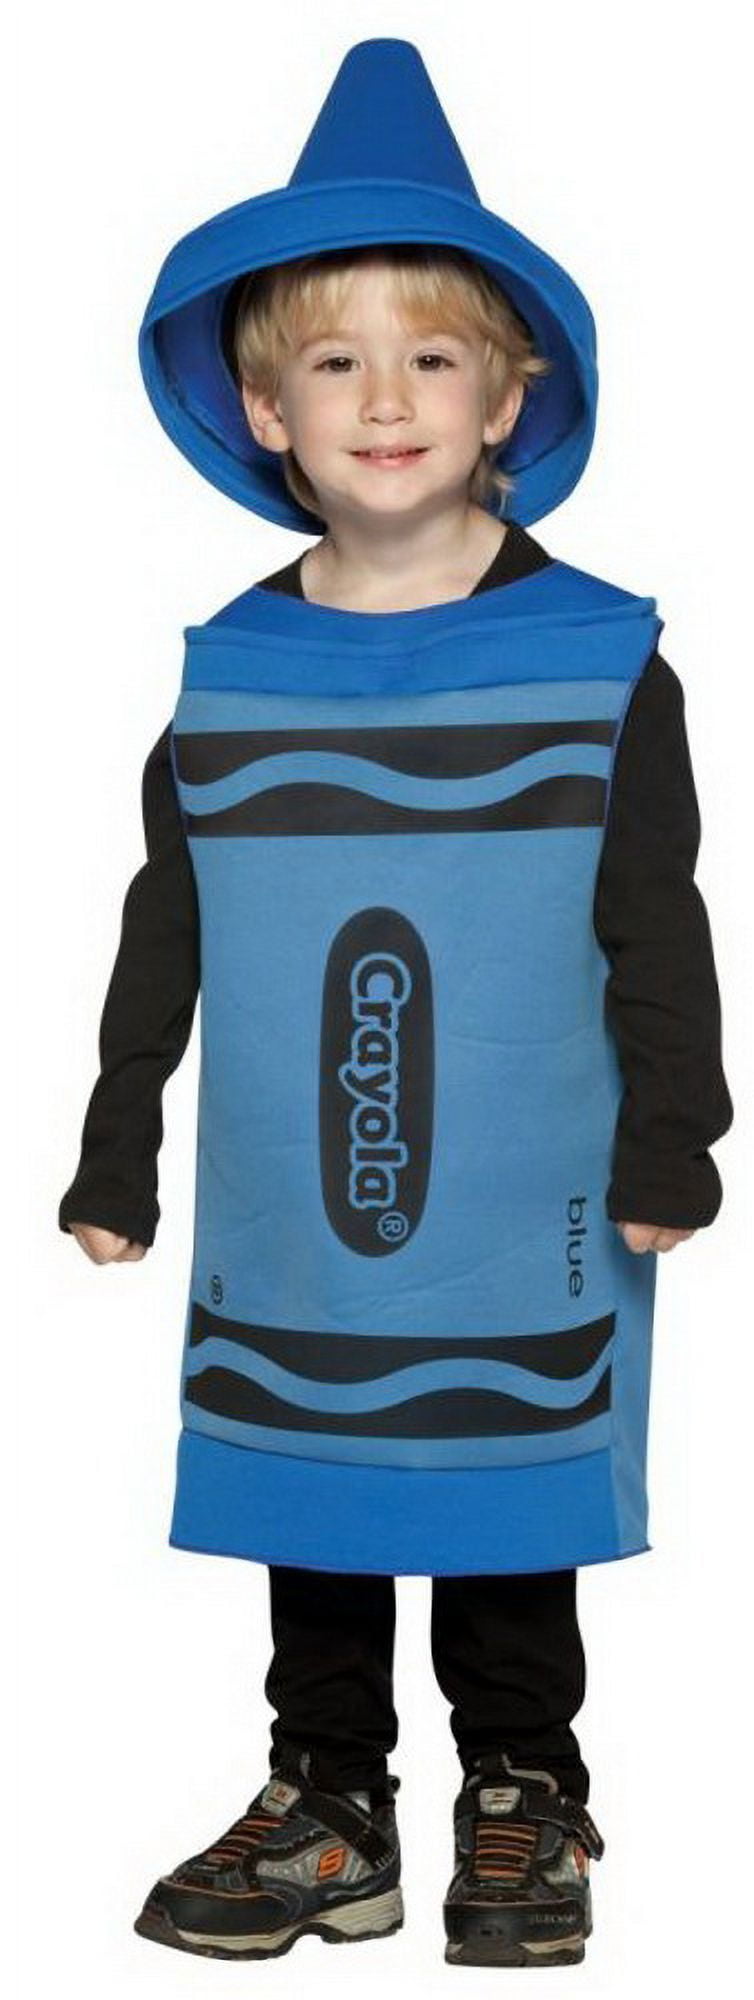 Crayon Box Toddler Costume Dress